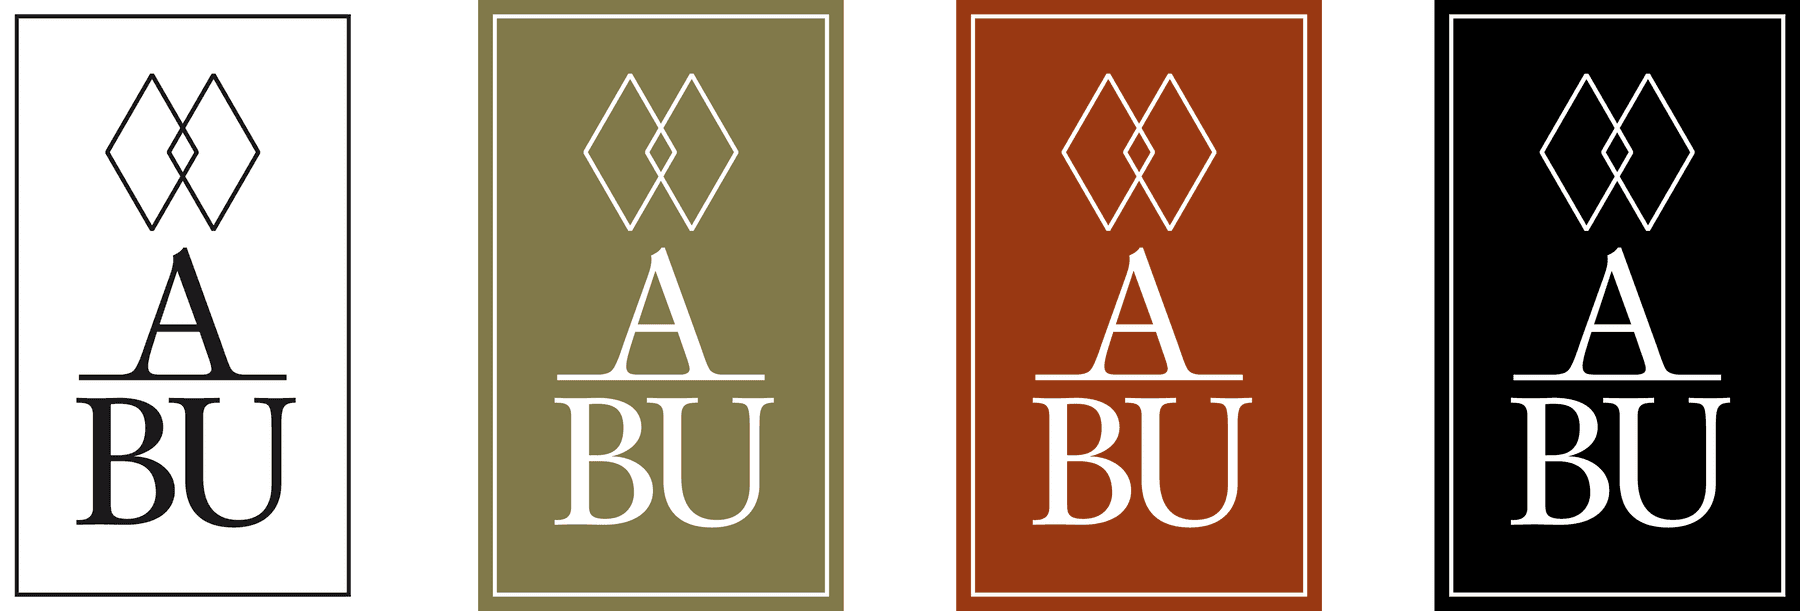 ABU Logos in vier Farben